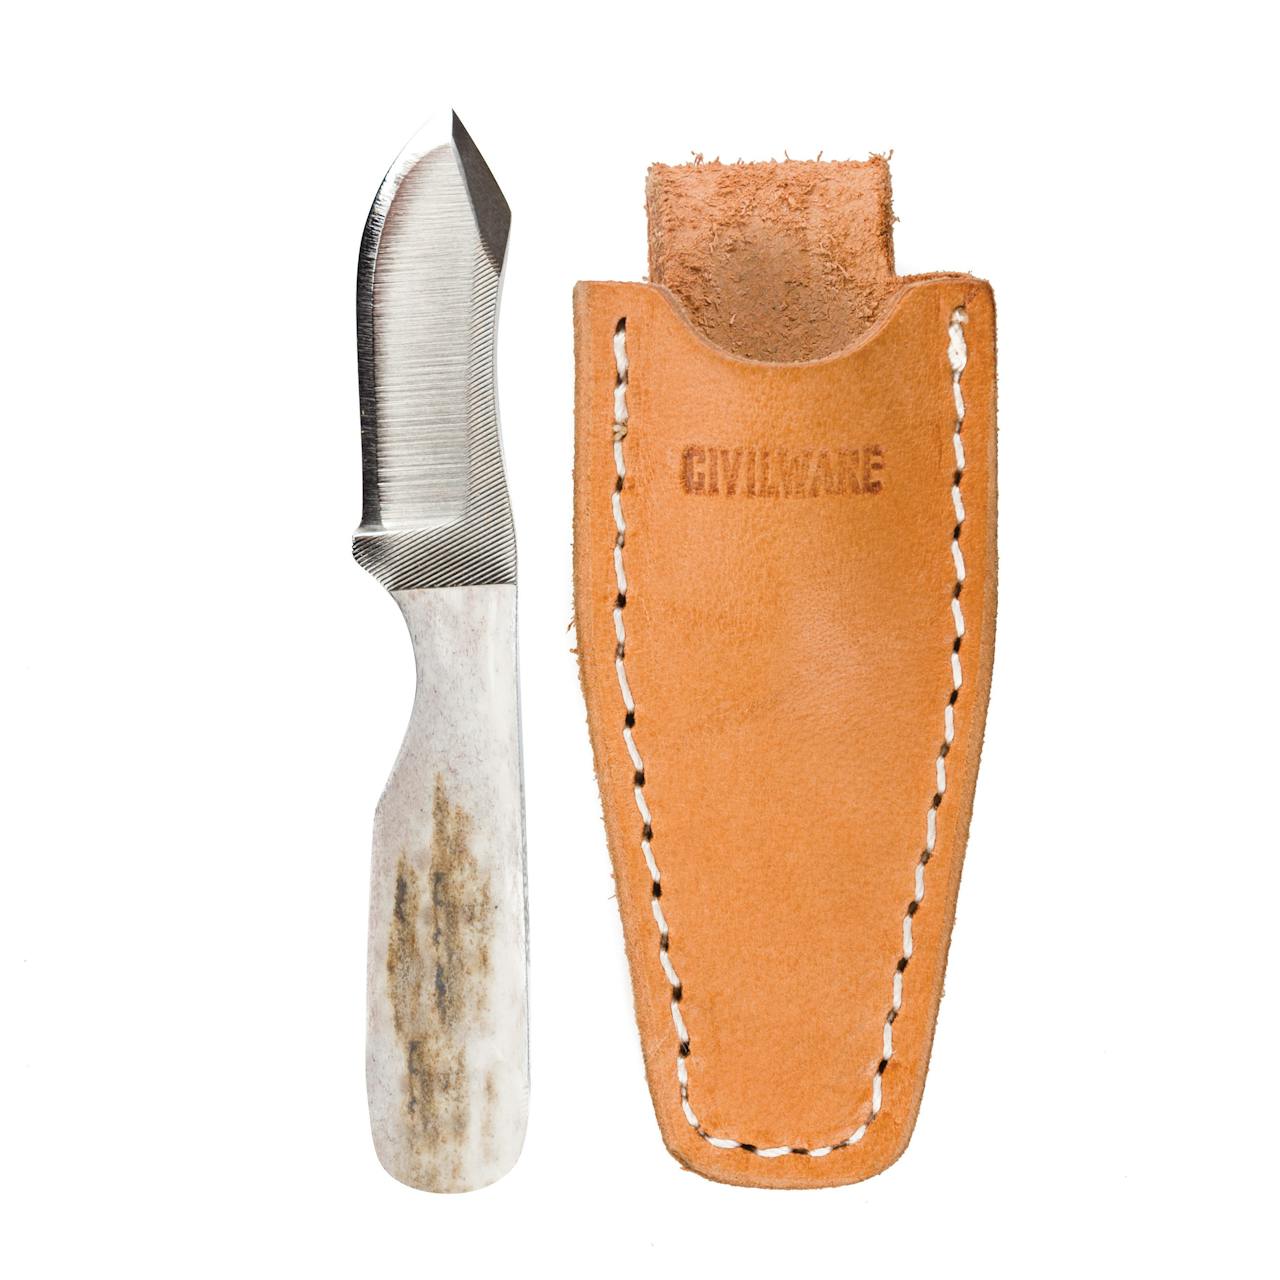 Civilware Elk Gripper Knife + Sheath